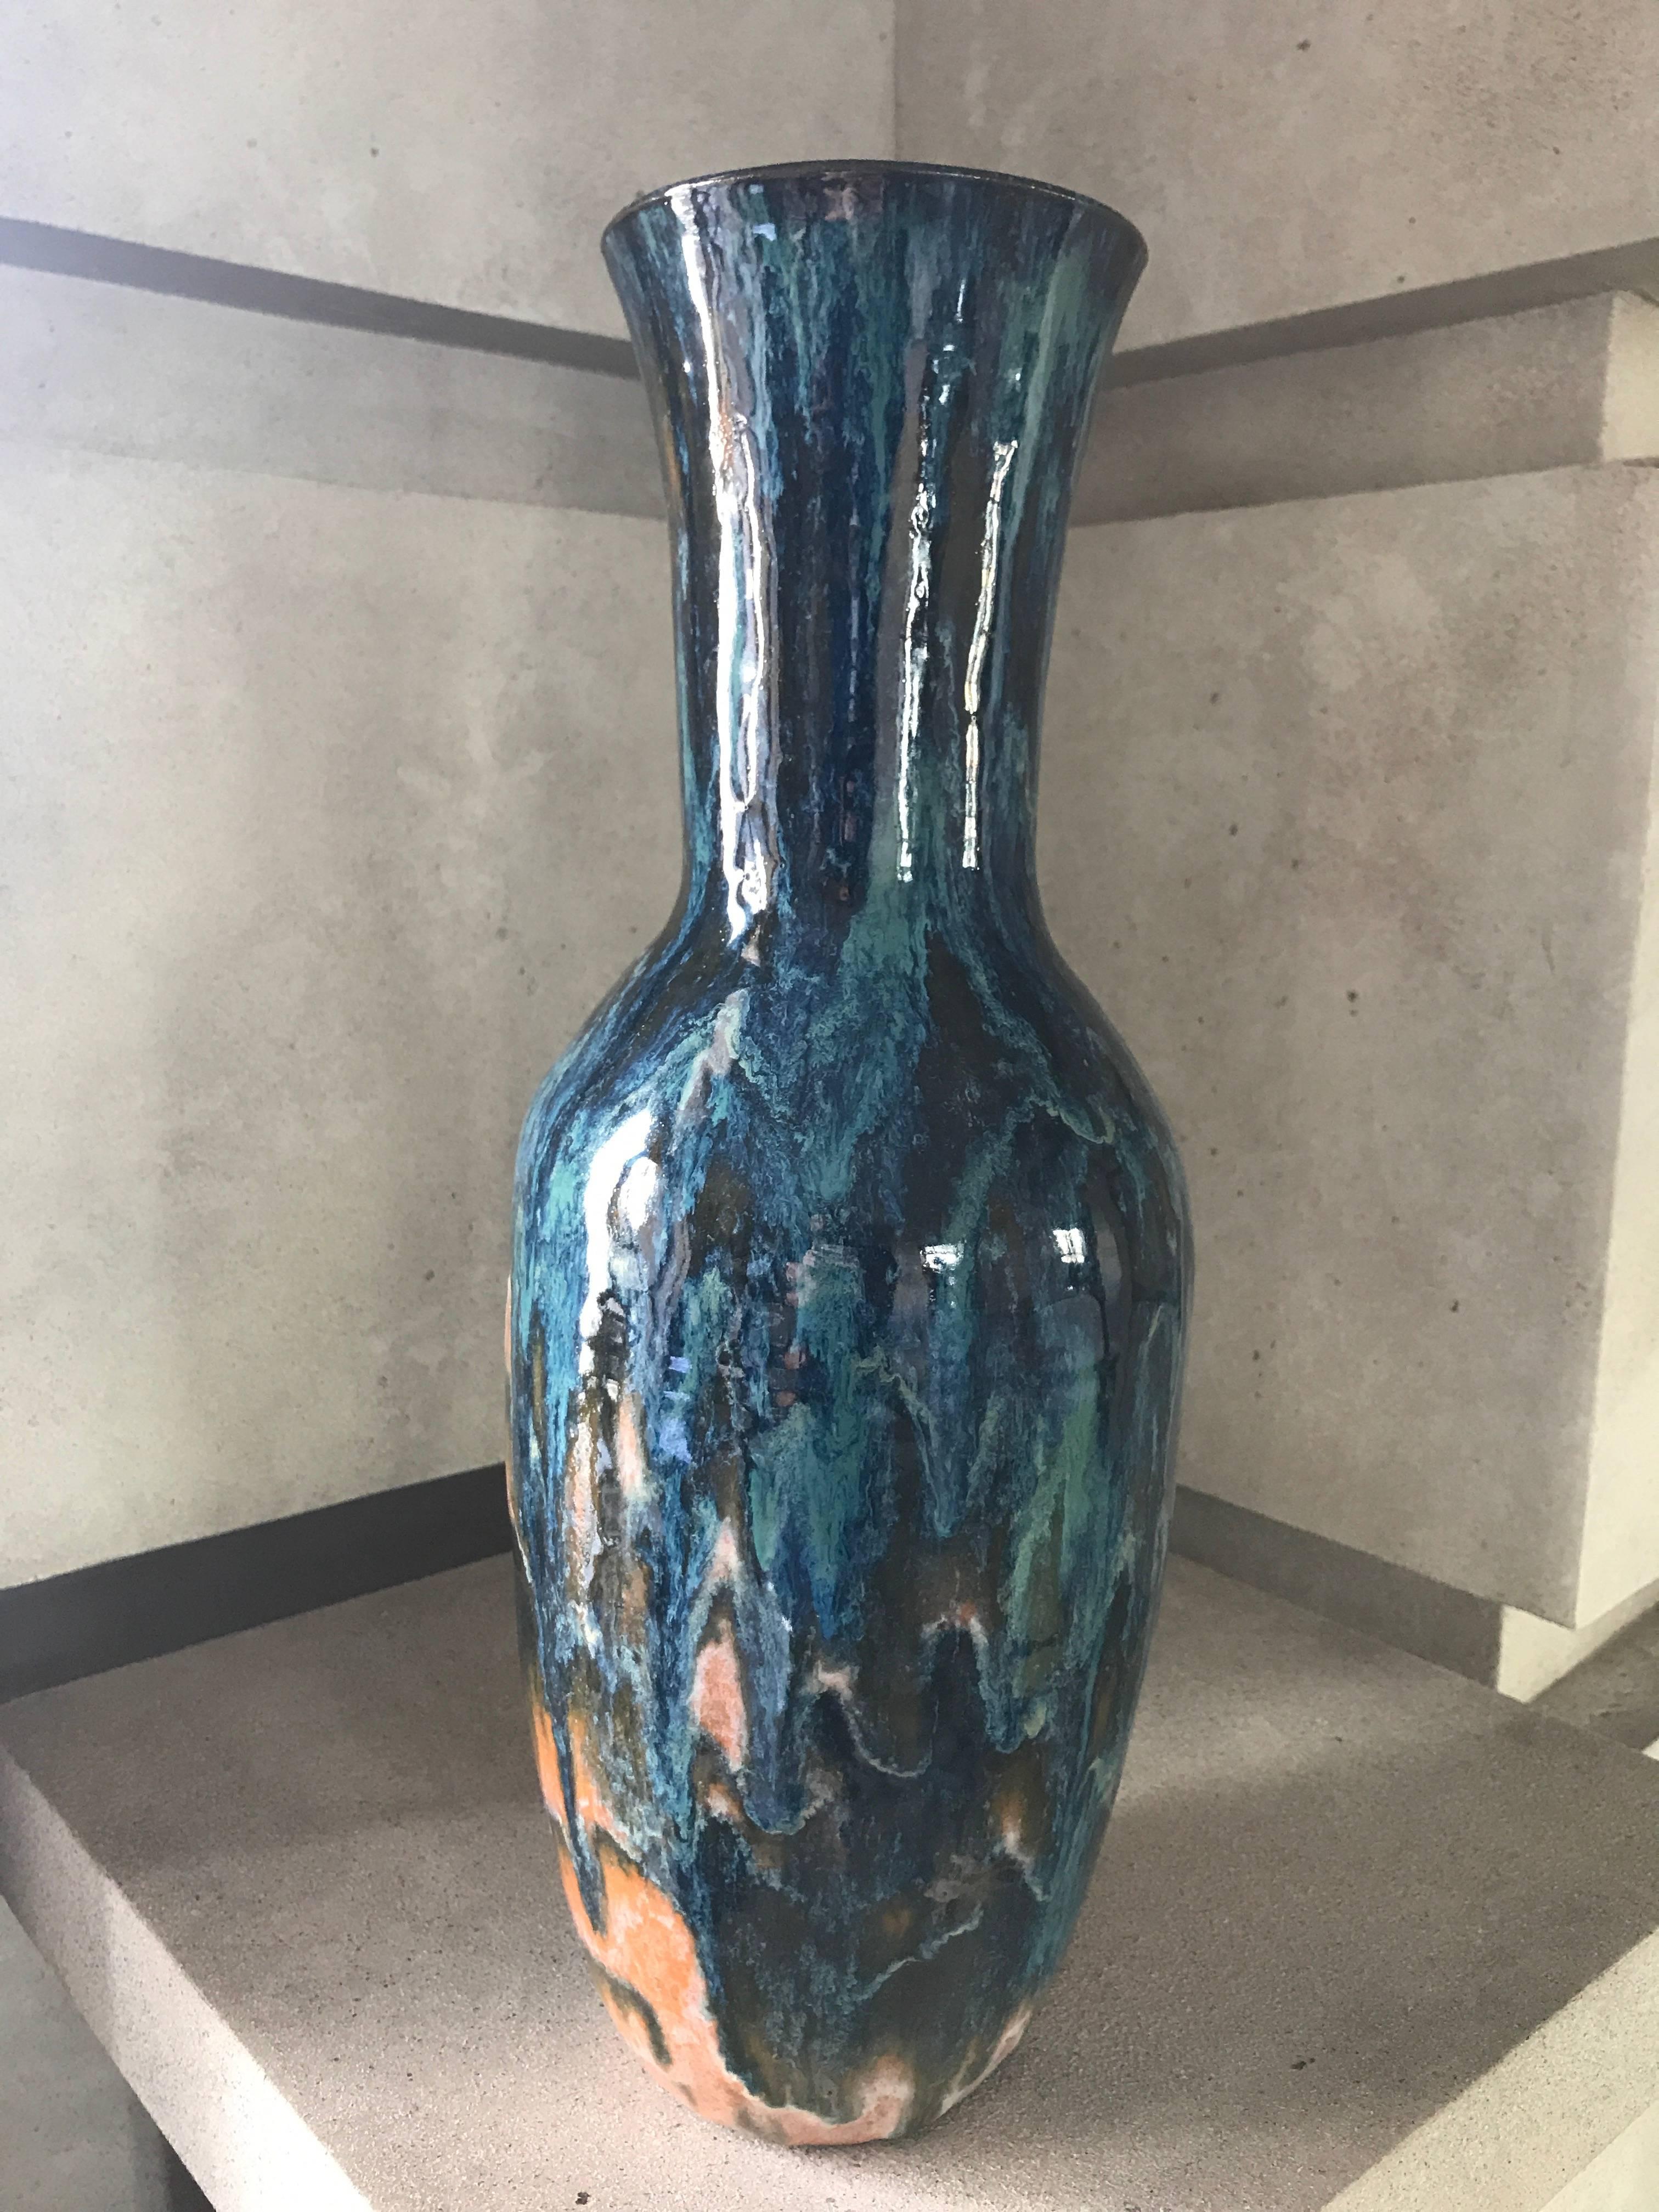 North American Handmade Modern, Custom Glazed Ceramic Vase #5, Vessel, Decorative Object For Sale